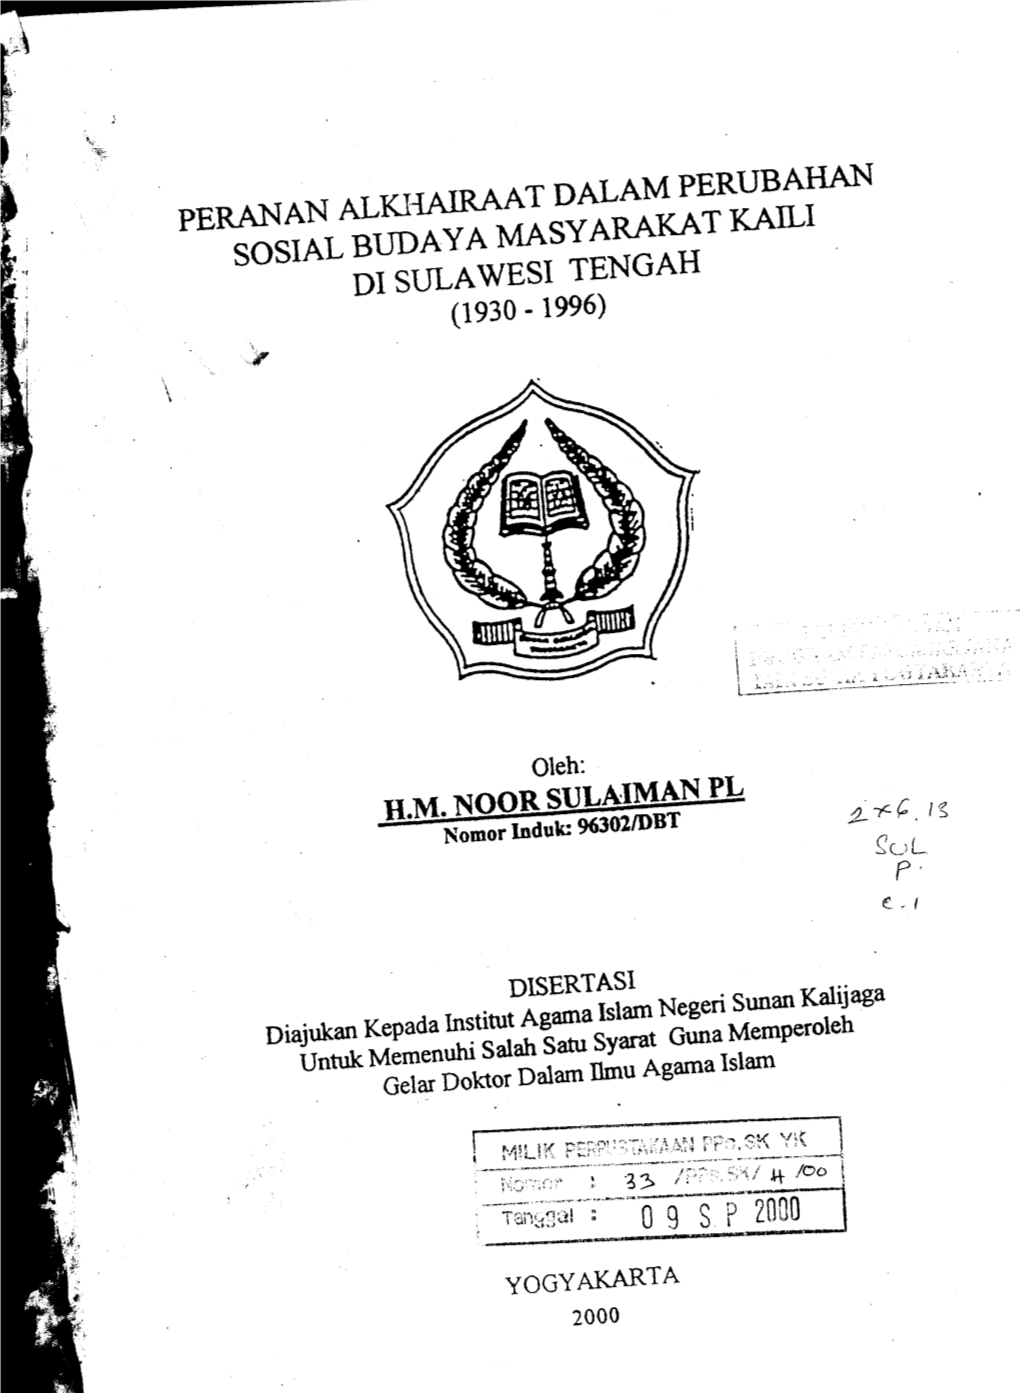 Pera.Nan Alkhairaat Dalam Perubahan Sosial Buday a Masy Araka T Kaili Di Sulawesi Tengah ., (1930 - 1996) \ '